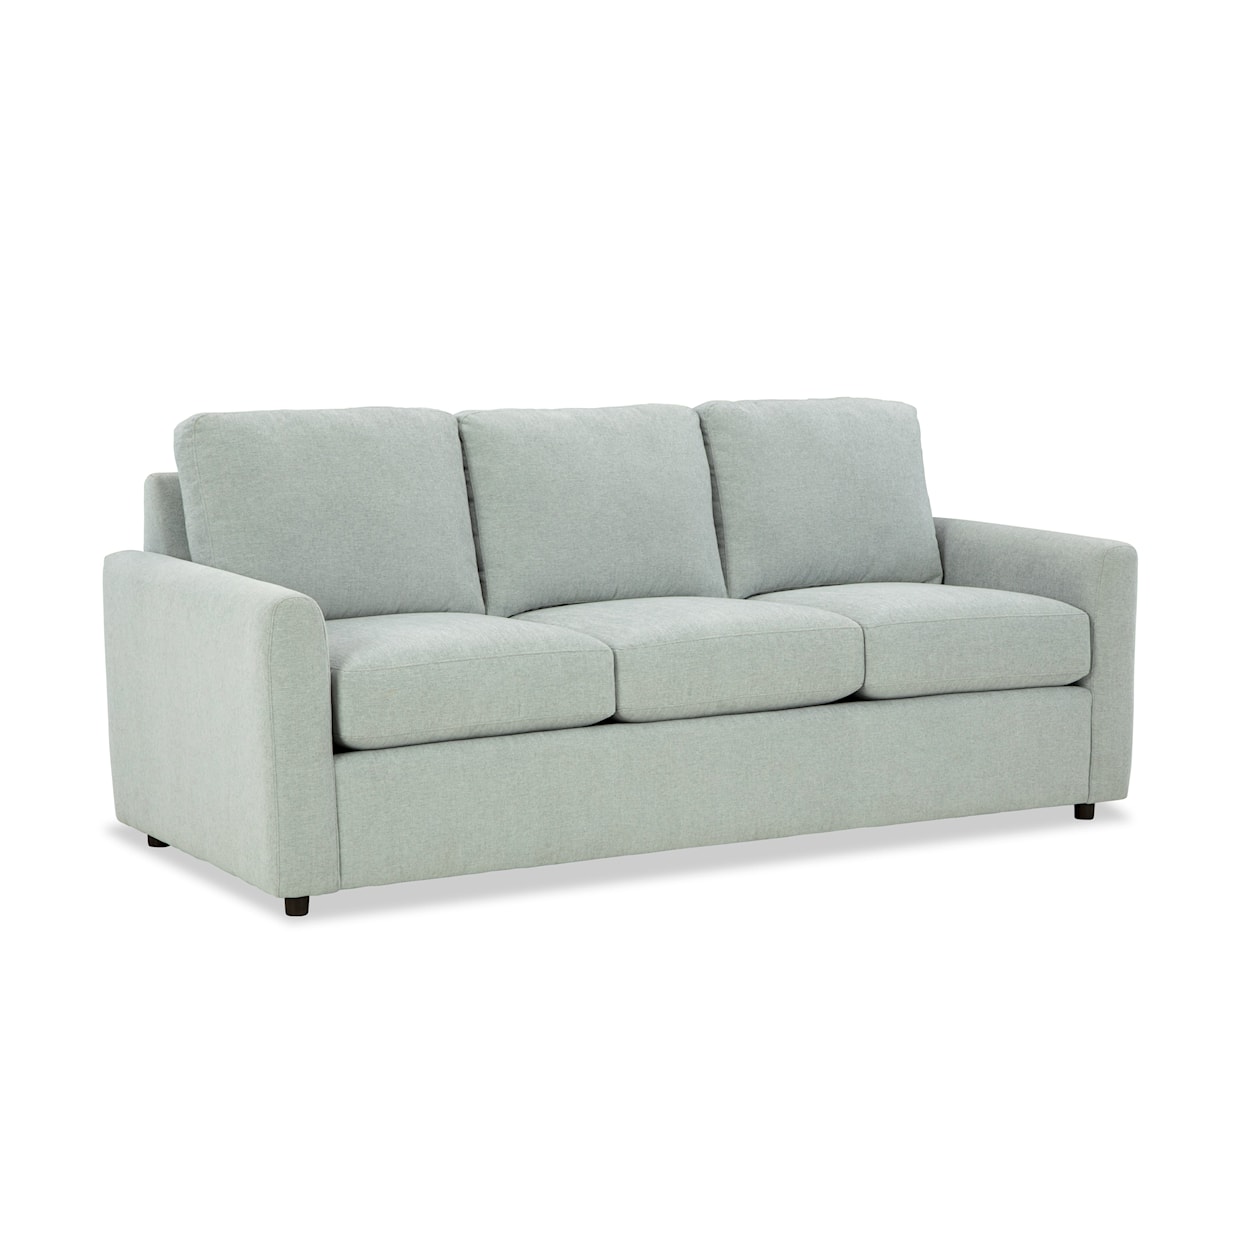 Hickorycraft 738050 Queen Sleeper Sofa